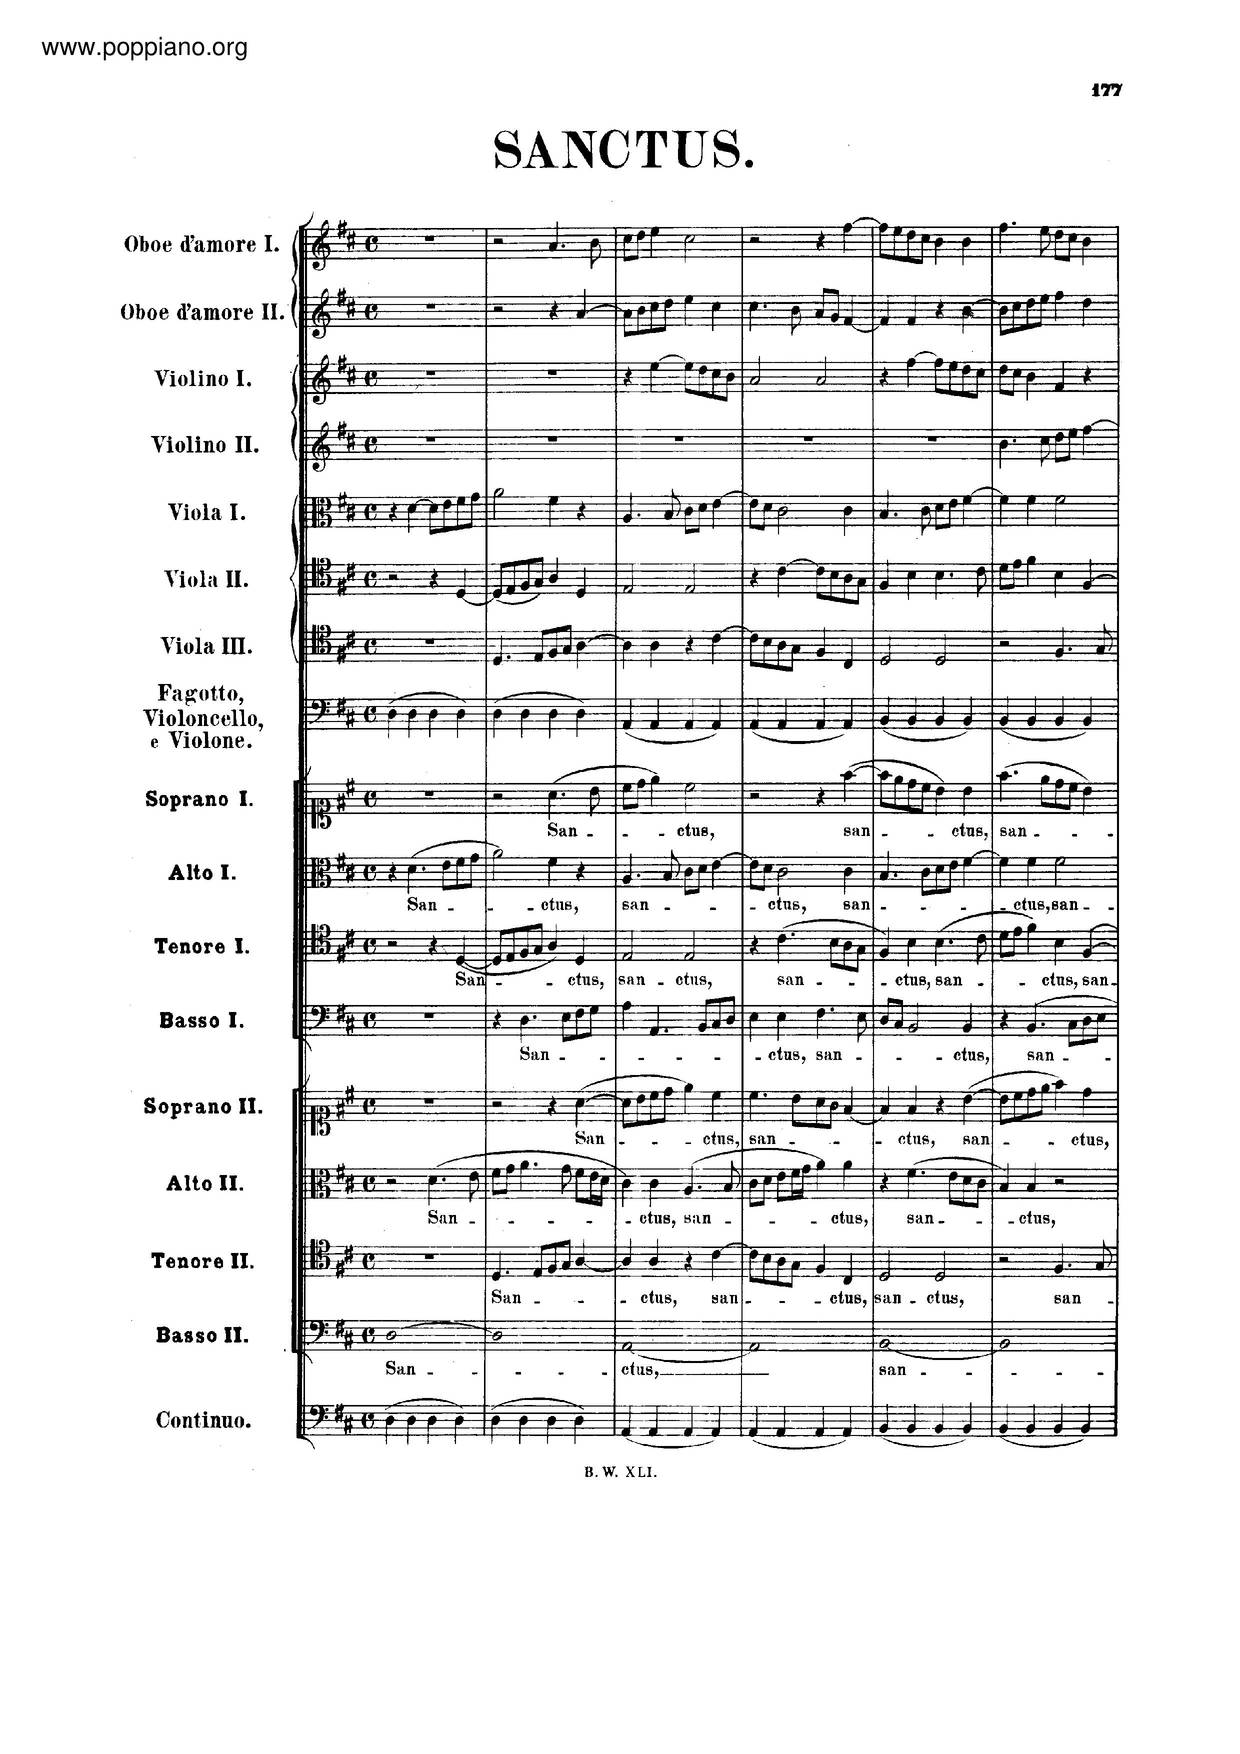 Johann Sebastian Bach Sanctus In D Major Bwv 241 琴譜pdf 香港流行鋼琴協會琴譜下載 ★